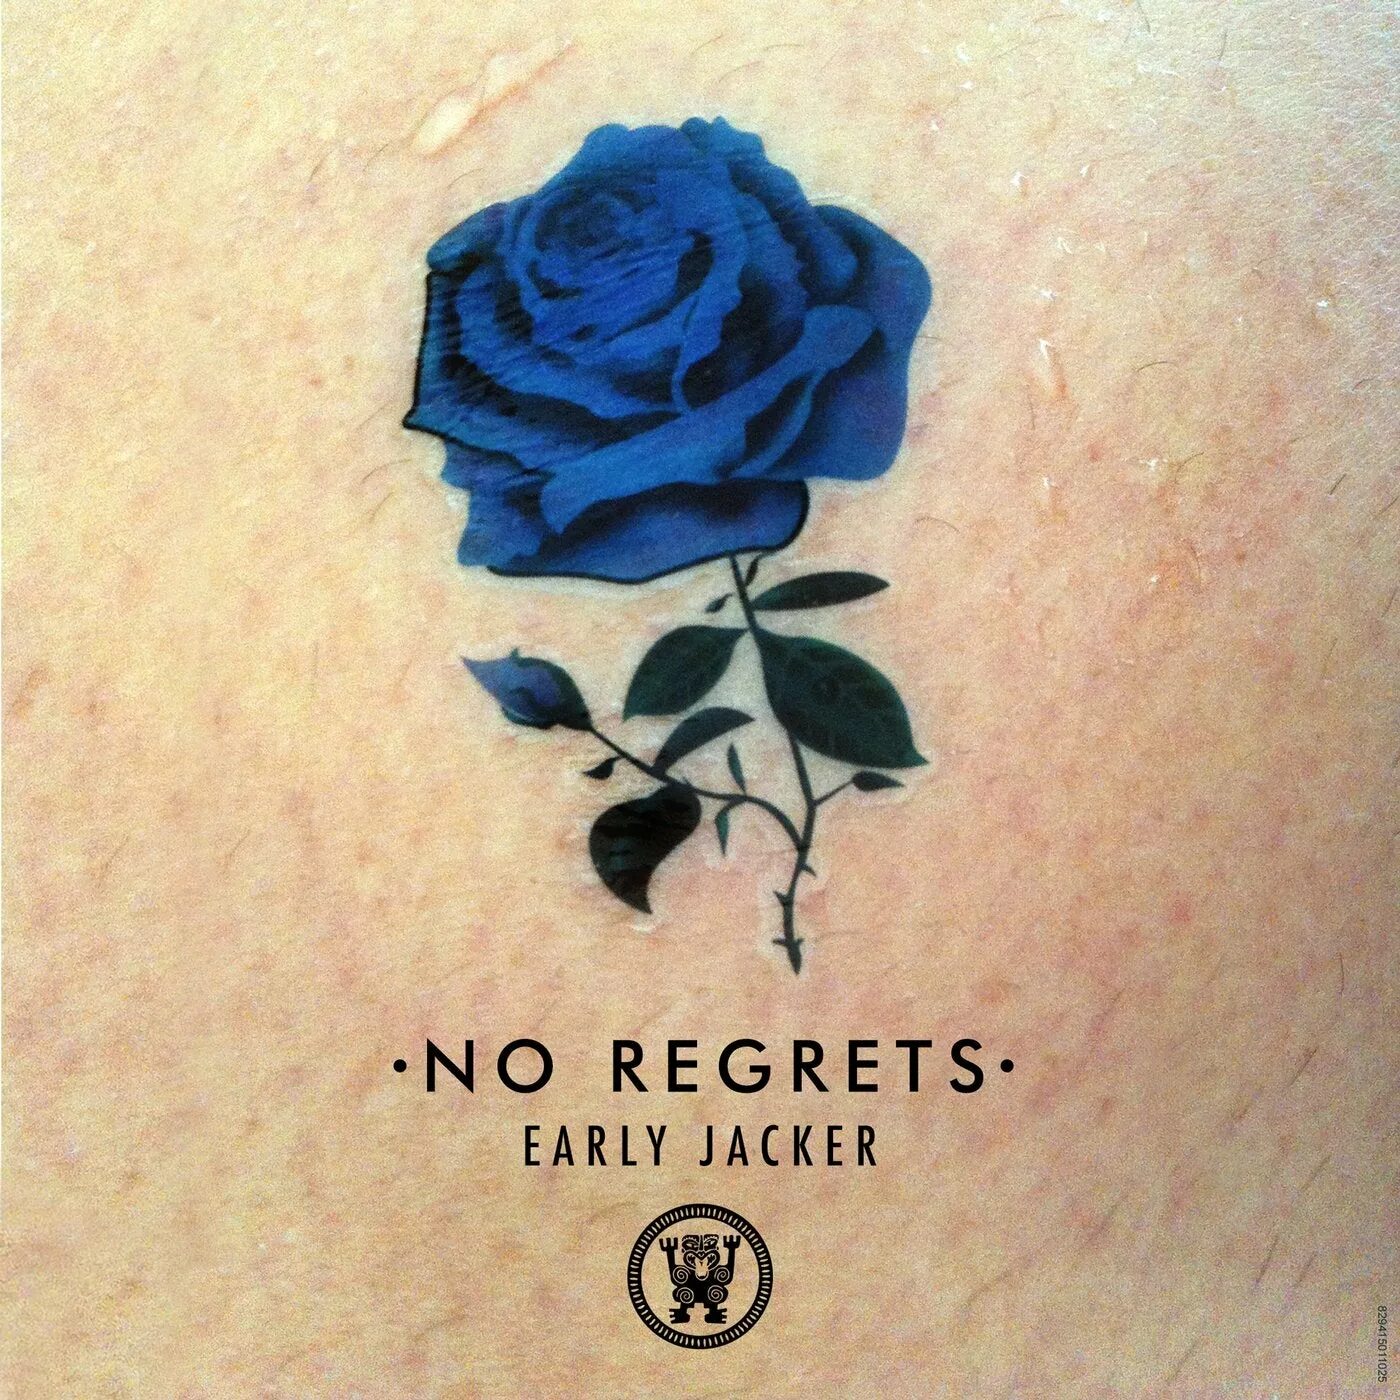 Regret перевод. No regrets перевод. No regrets надпись. No regrets (1975).